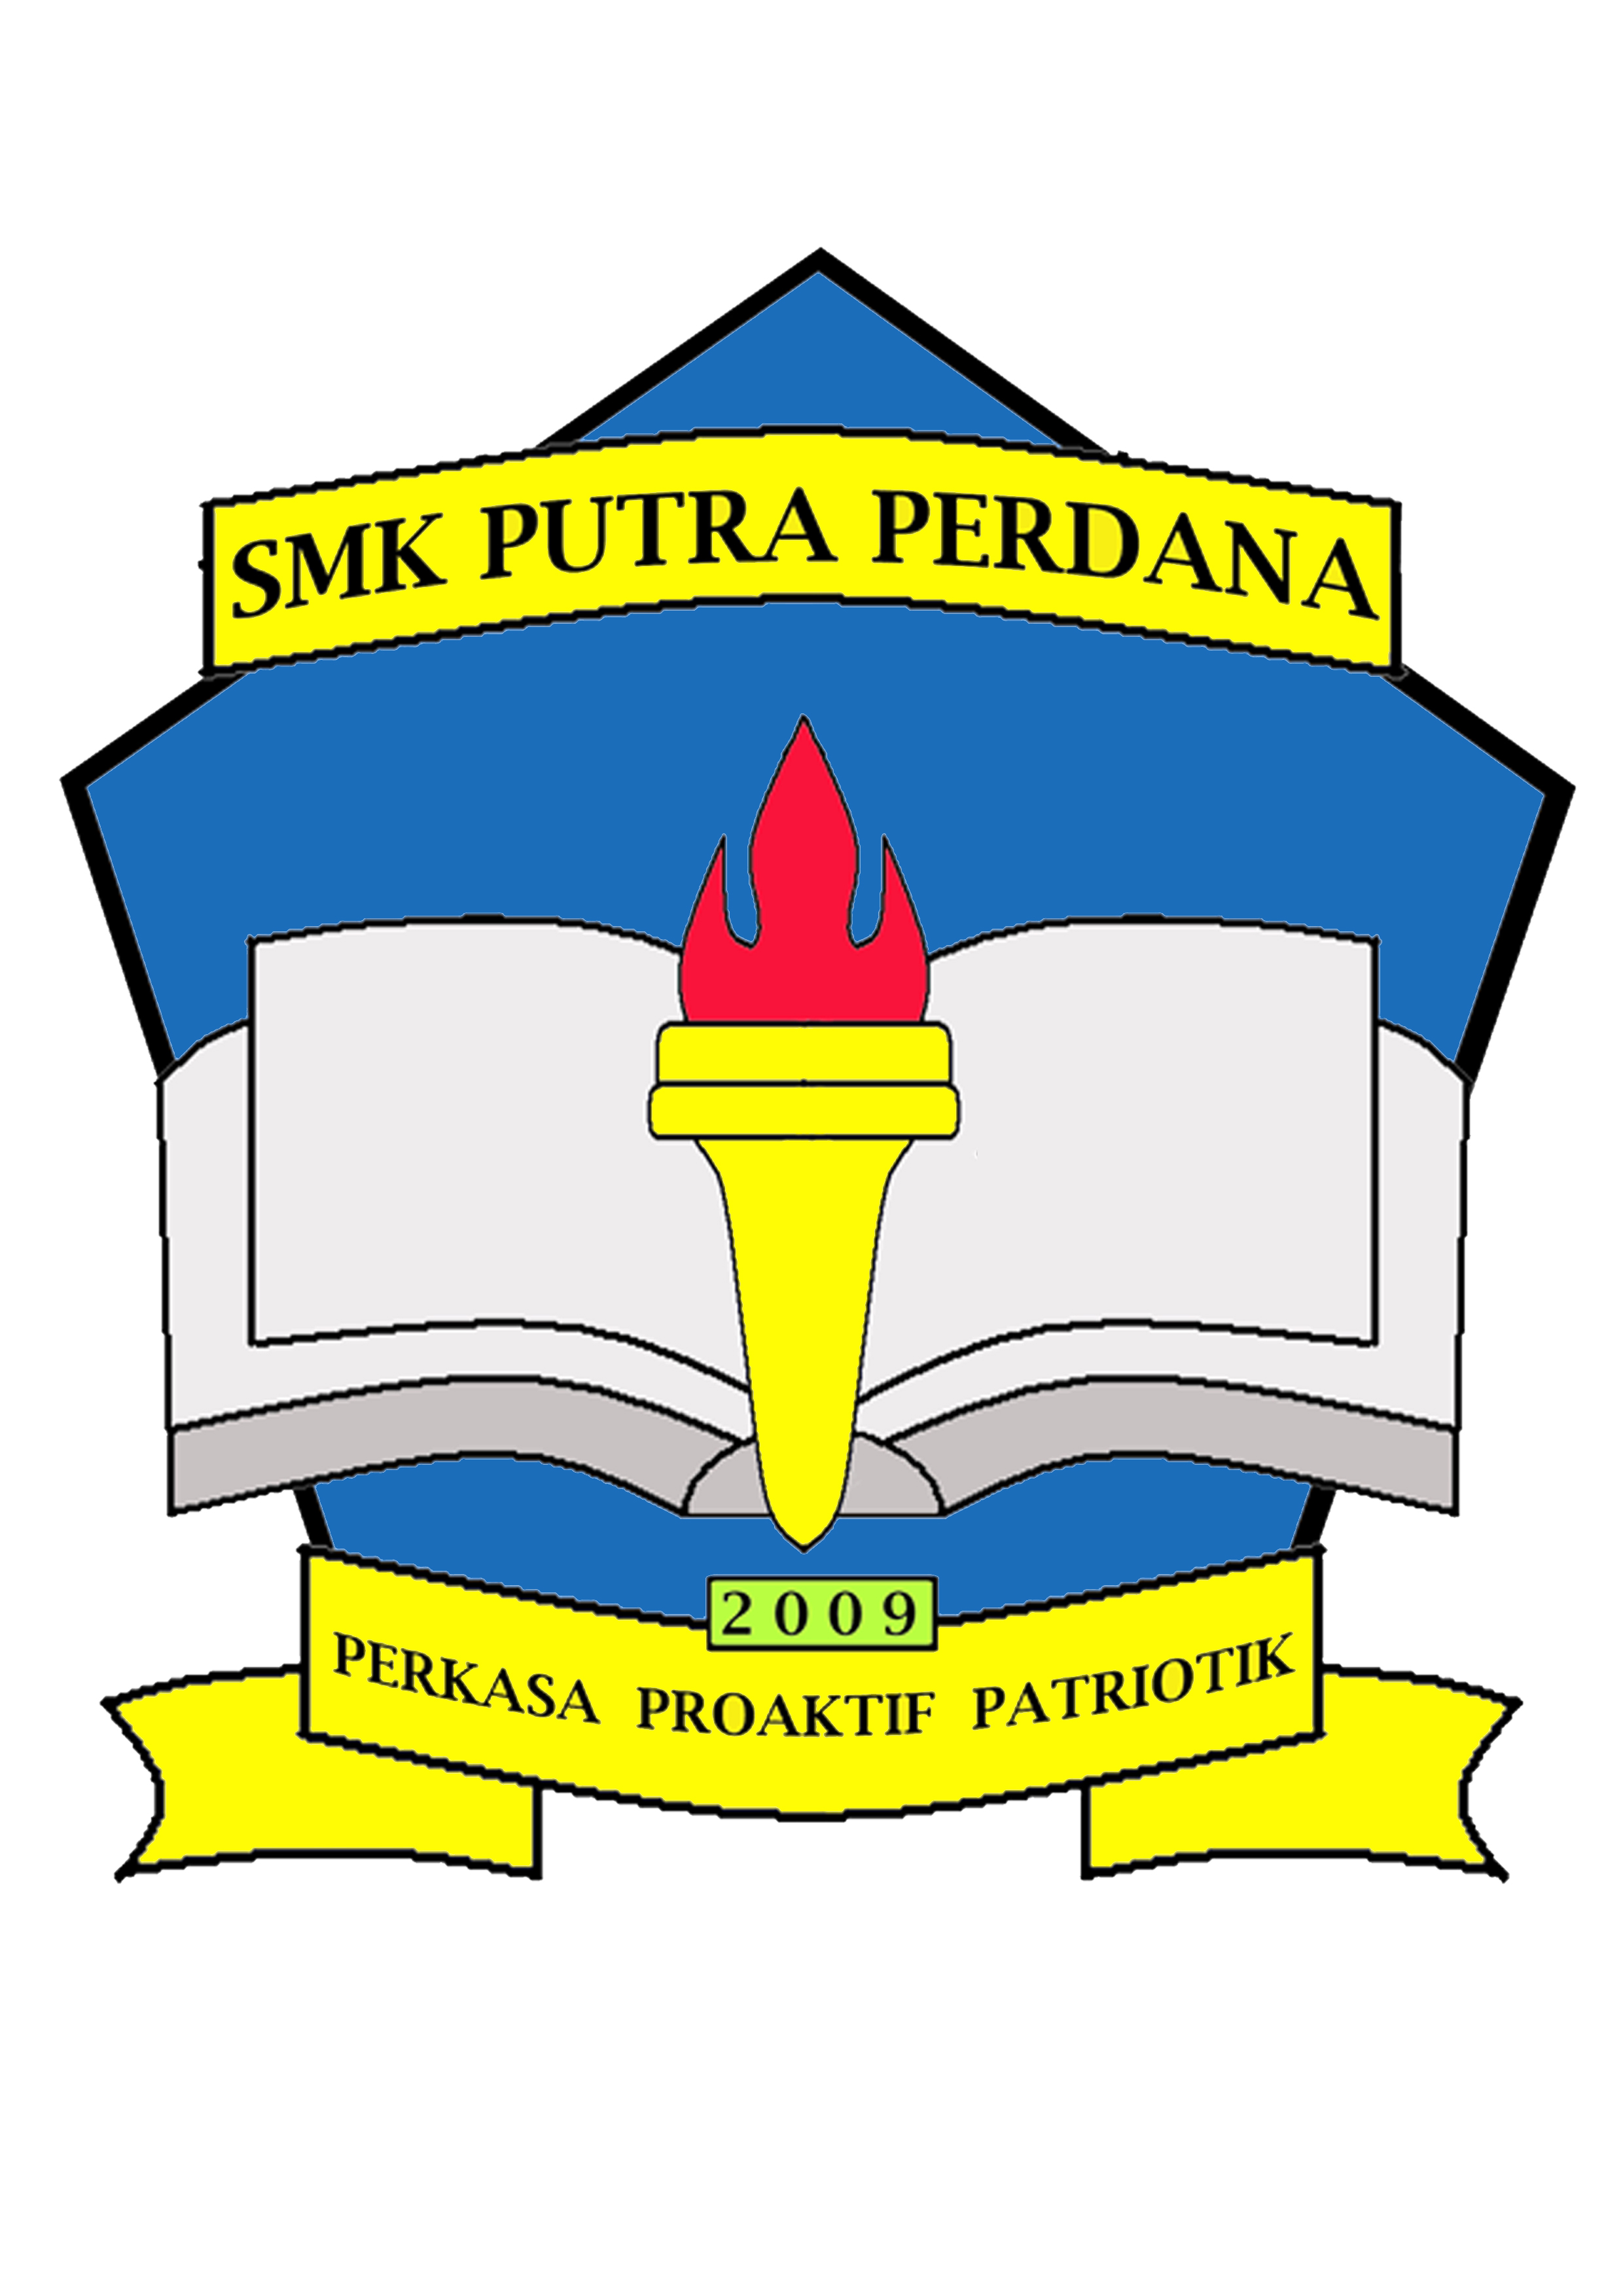 SMK Putra Perdana校徽